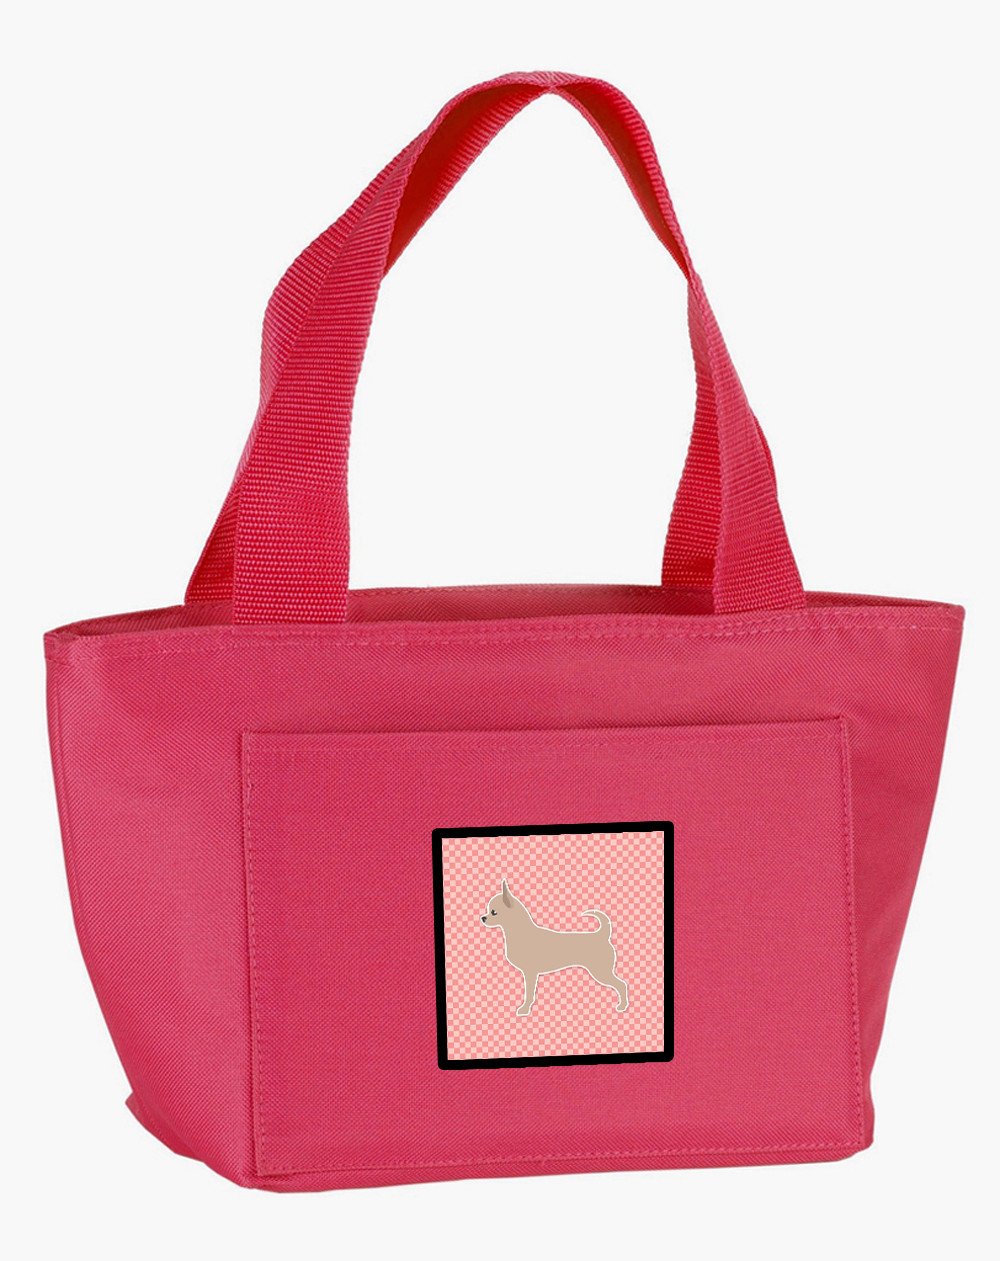 Chihuahua Checkerboard Pink Lunch Bag BB3650PK-8808 by Caroline's Treasures